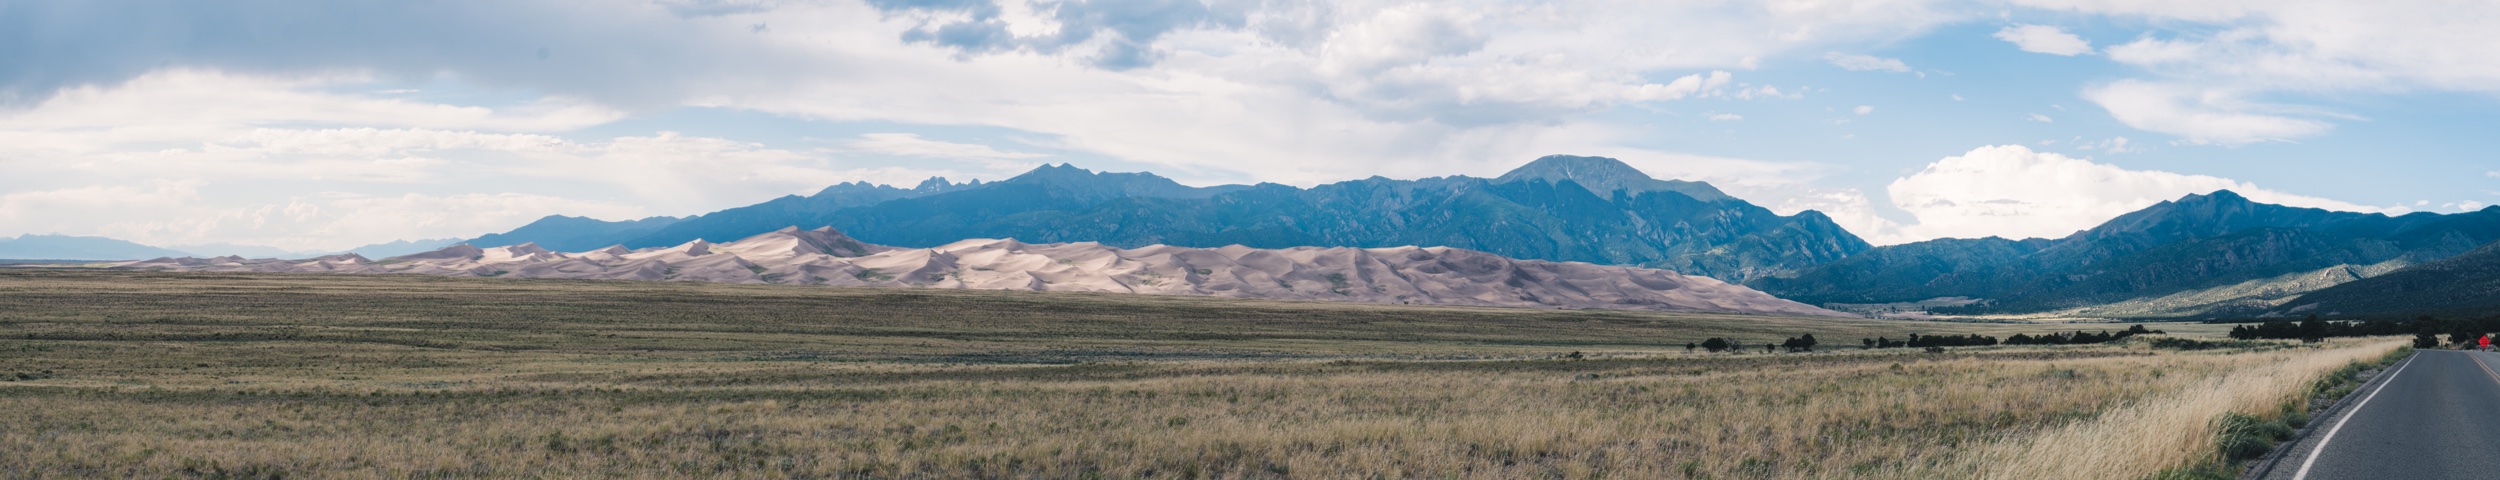 Colorado Desert-42.jpeg